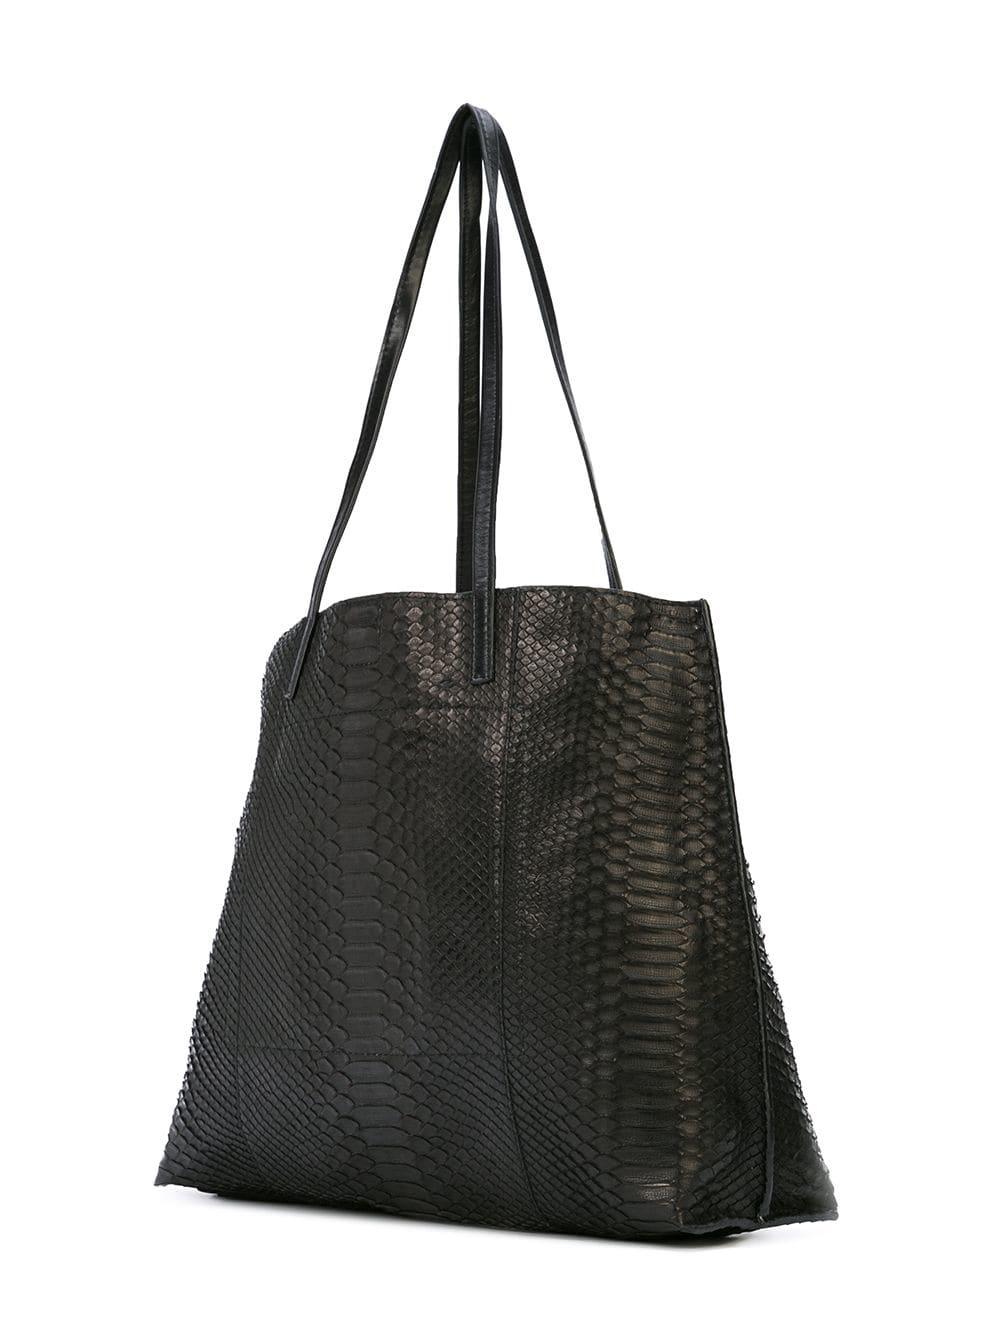 B May Shopper Tote Bag in Black - Lyst